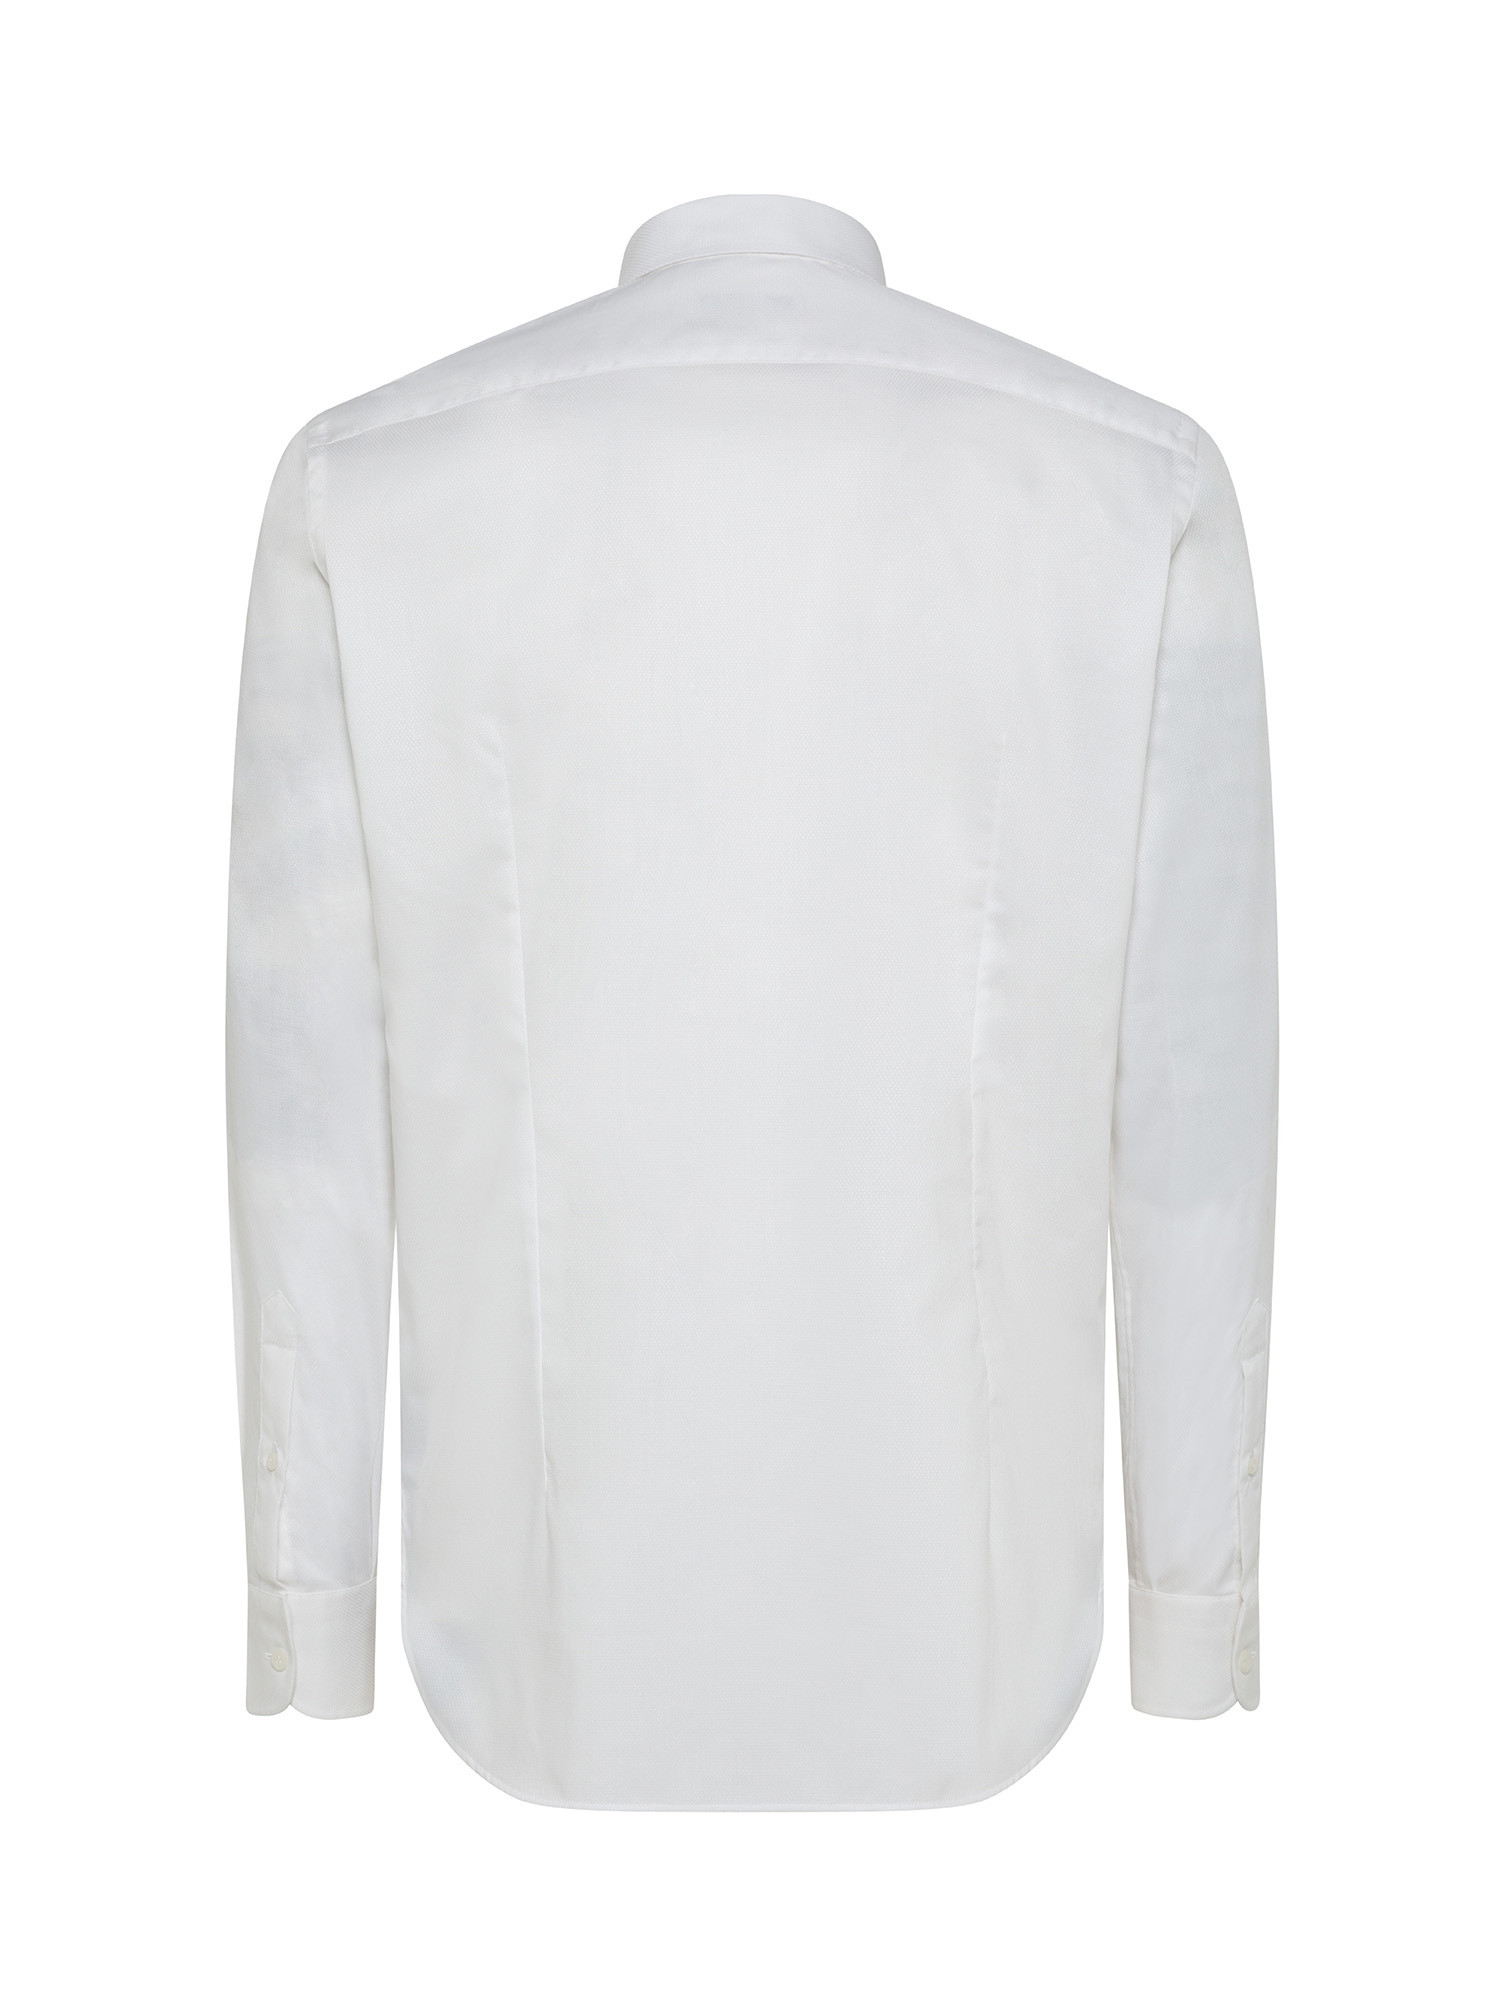 Luca D'Altieri - Camicia slim fit in cotone elasticizzato, Bianco, large image number 1